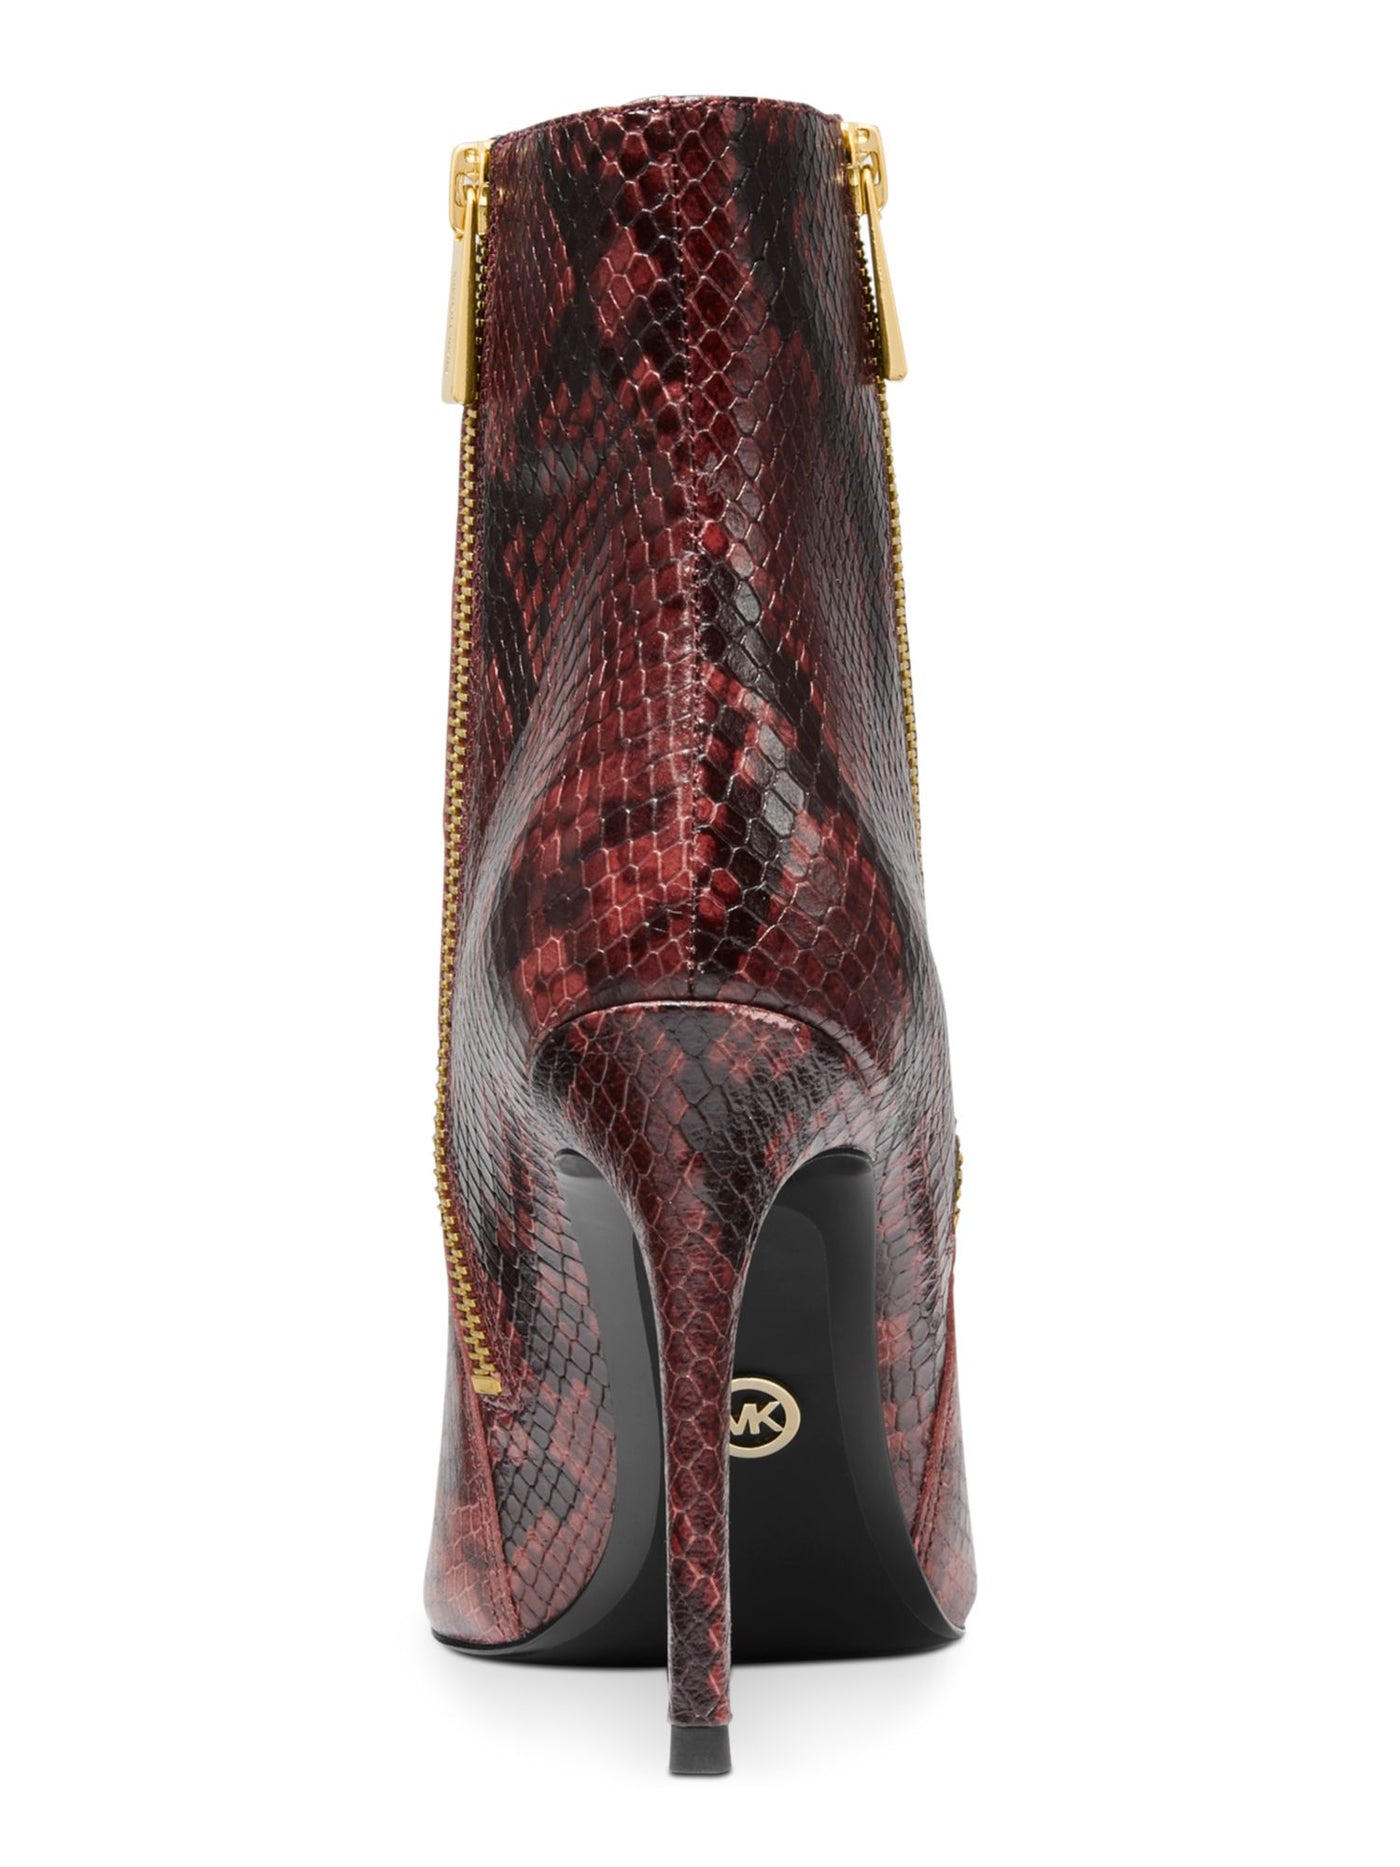 MICHAEL KORS Womens Maroon Snakeskin Padded Comfort Keke Pointed Toe Stiletto Leather Booties 8 M